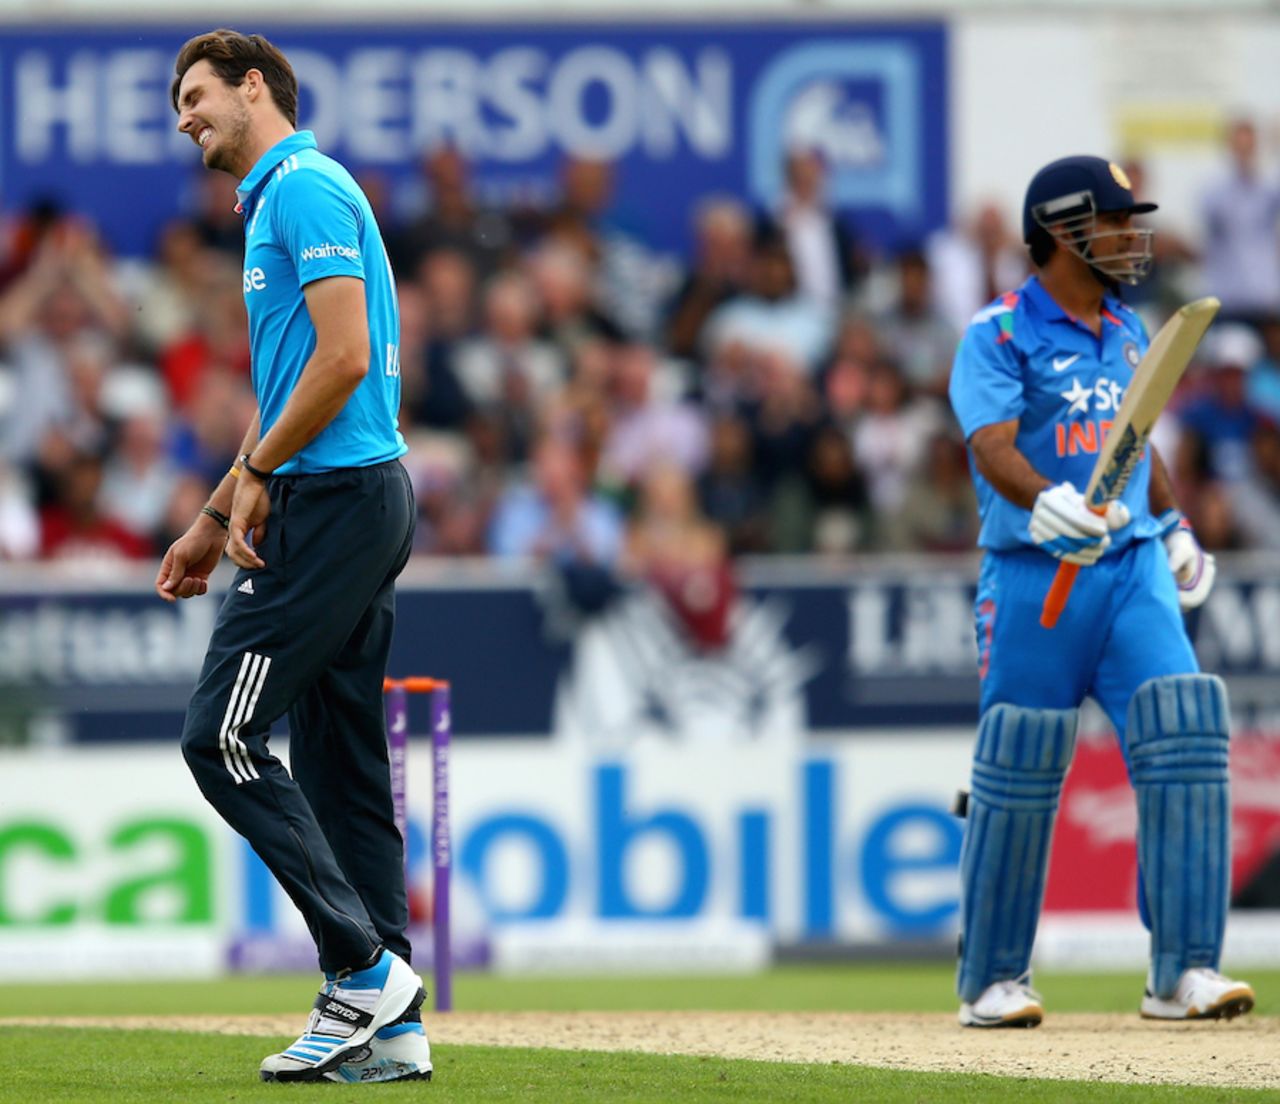 Steven Finn reacts after dismissing MS Dhoni, England v India, 5th ODI, Headingley, September 5, 2014